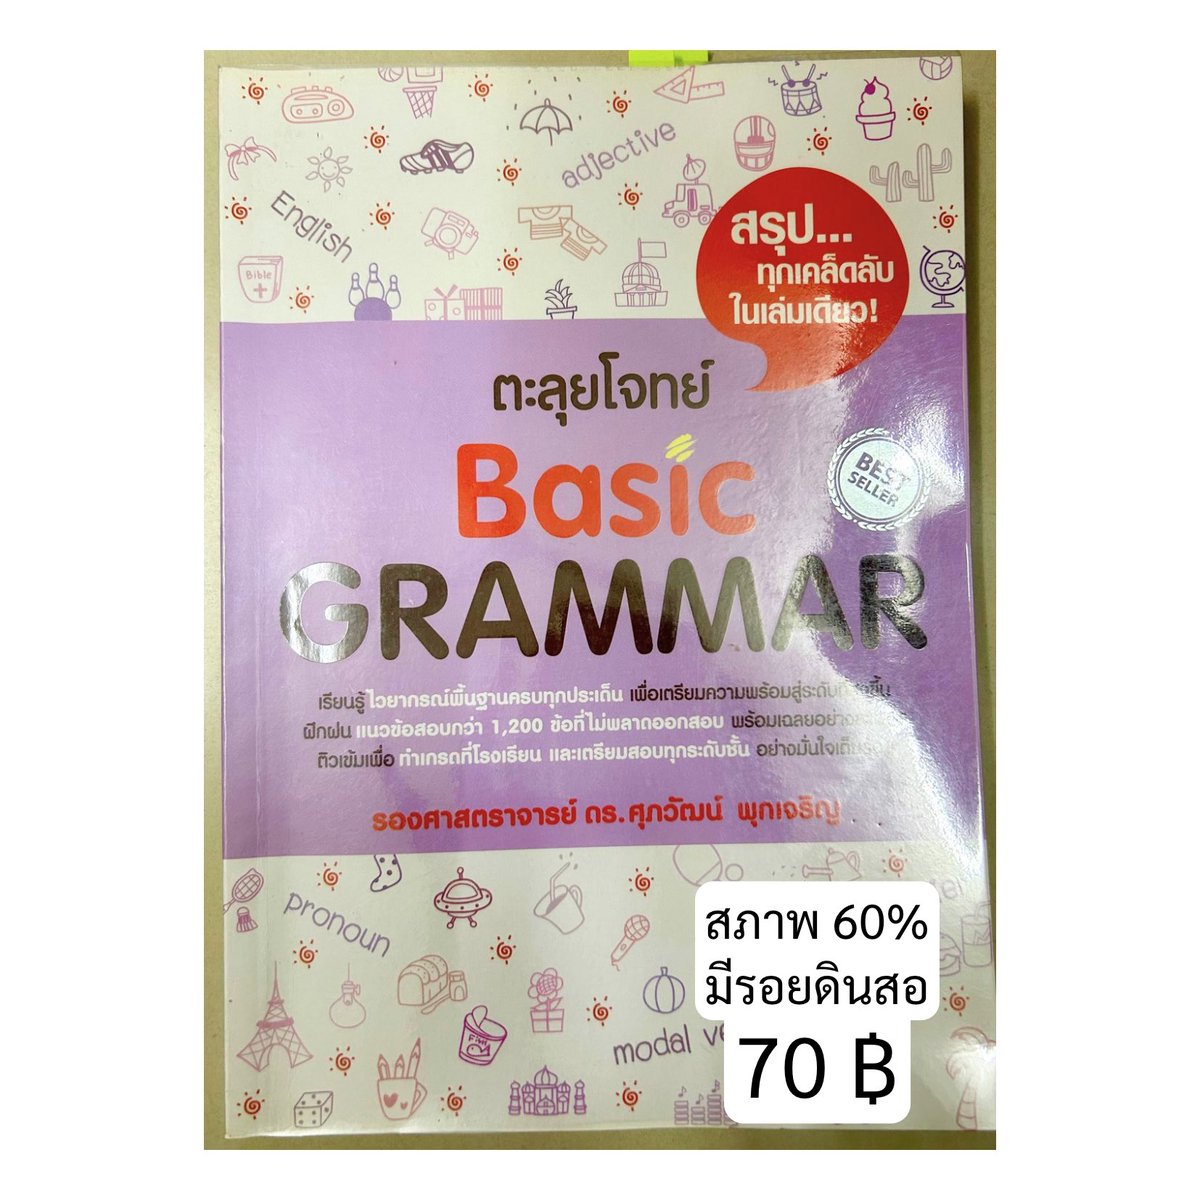 Basic Grammar ดร.ศุภวัฒน์ ราคา 70 บาท

ค่าส่ง 45 (เล่มต่อไป +10) 
หรือนัดรับเซ็นทรัลหาดใหญ่
สนใจทักมาขอดูเพิ่มเติมได้ค่ะ

#หนังสือมือสอง #หนังสือเตรียมสอบ #หนังสือเตรียมสอบมือสอง 
#dek66 #dek67 #dek68 #dek69 #dek70 #dek71